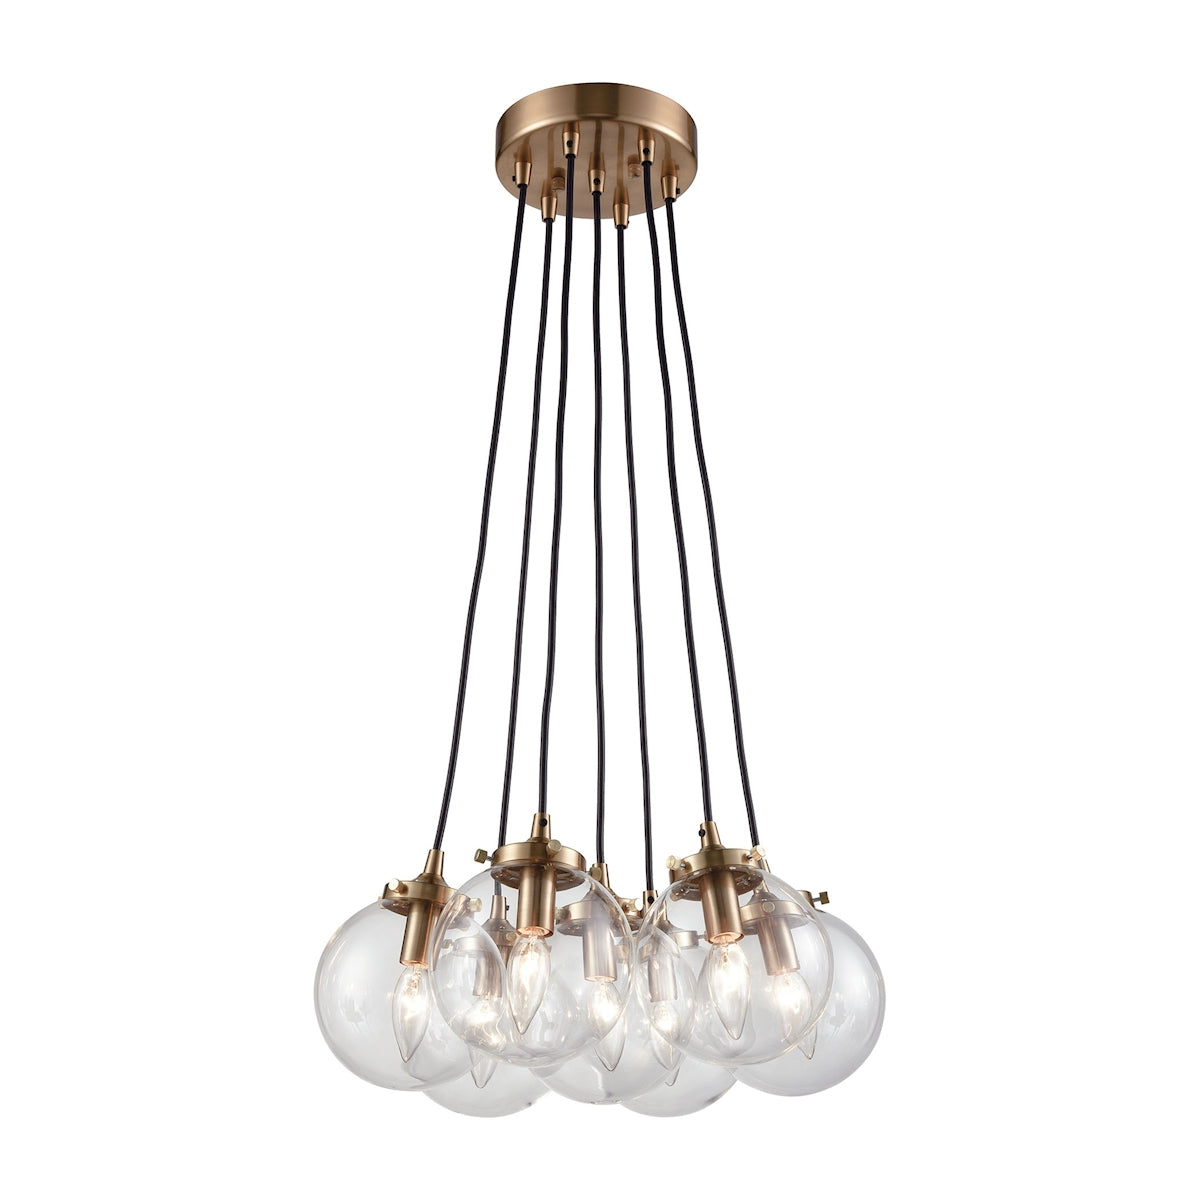 ELK Lighting 14465/7 Boudreaux 7-Light Chandelier in Satin Brass with Sphere-shaped Glass